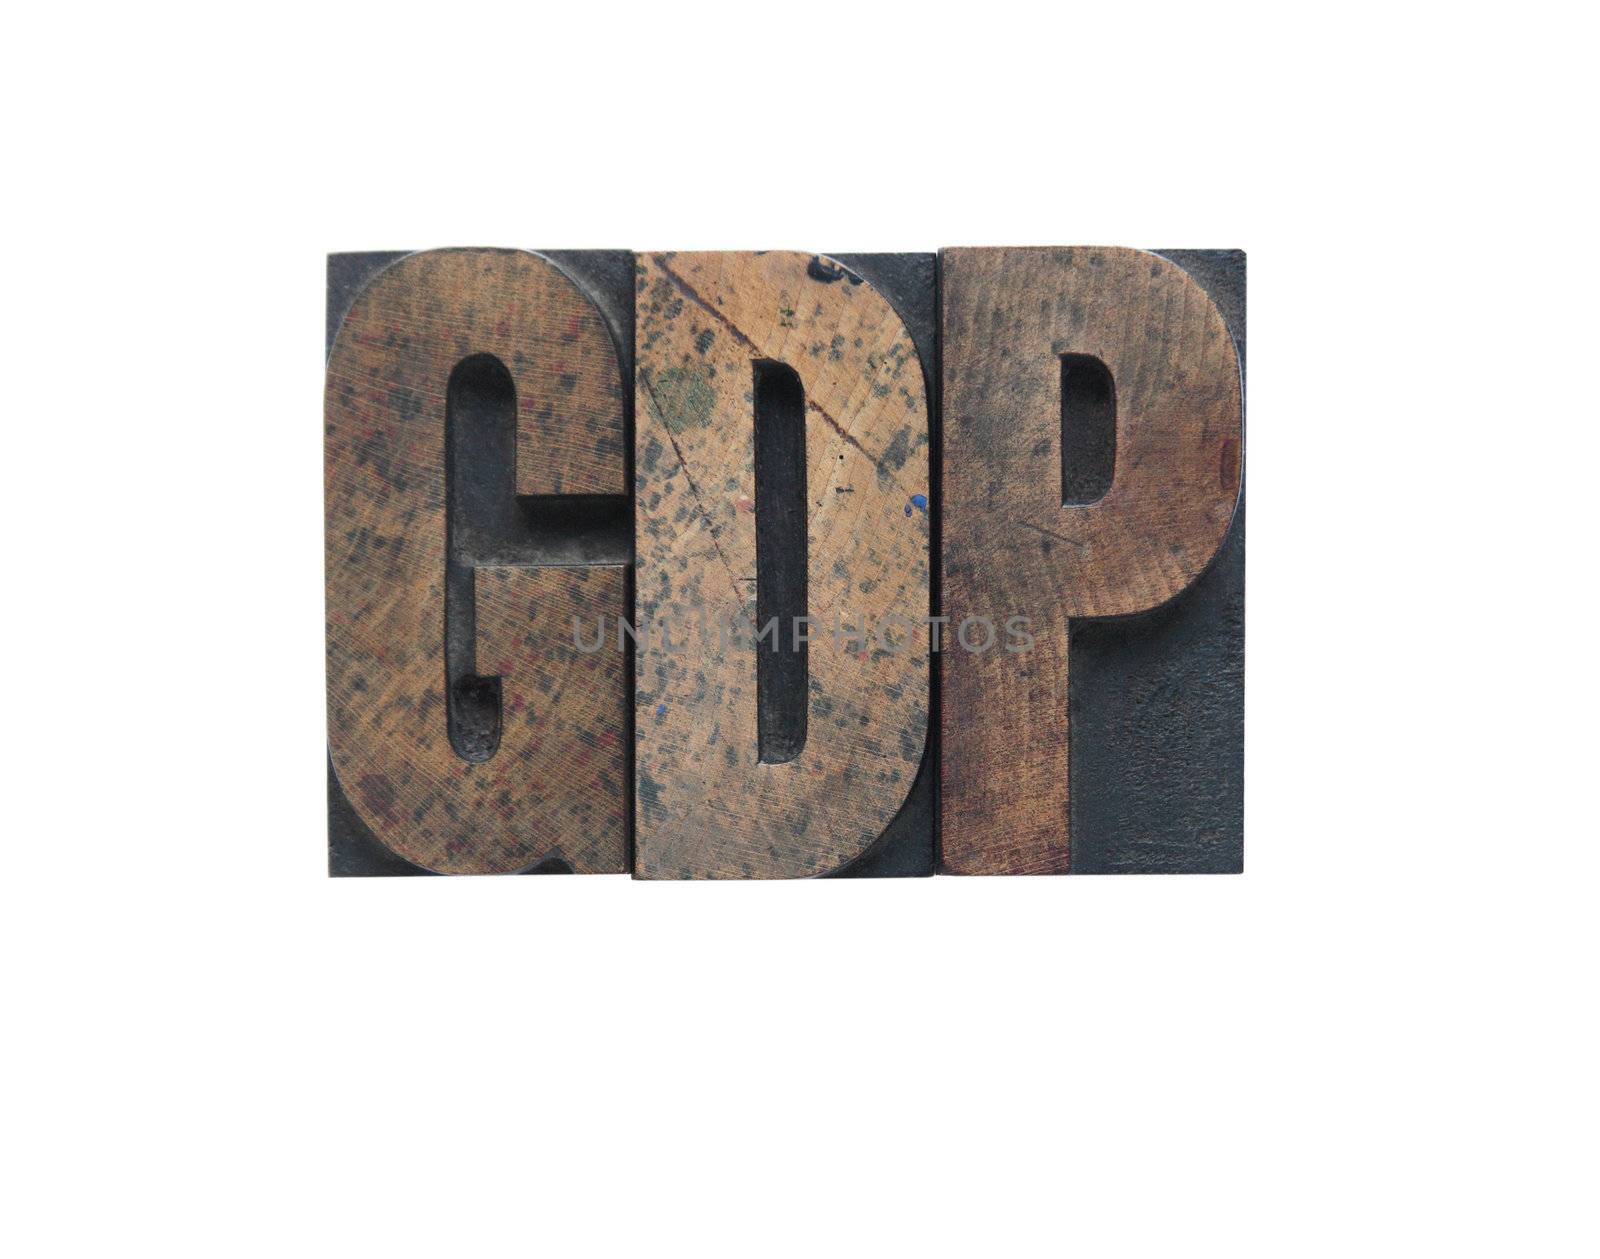 GDP by nebari